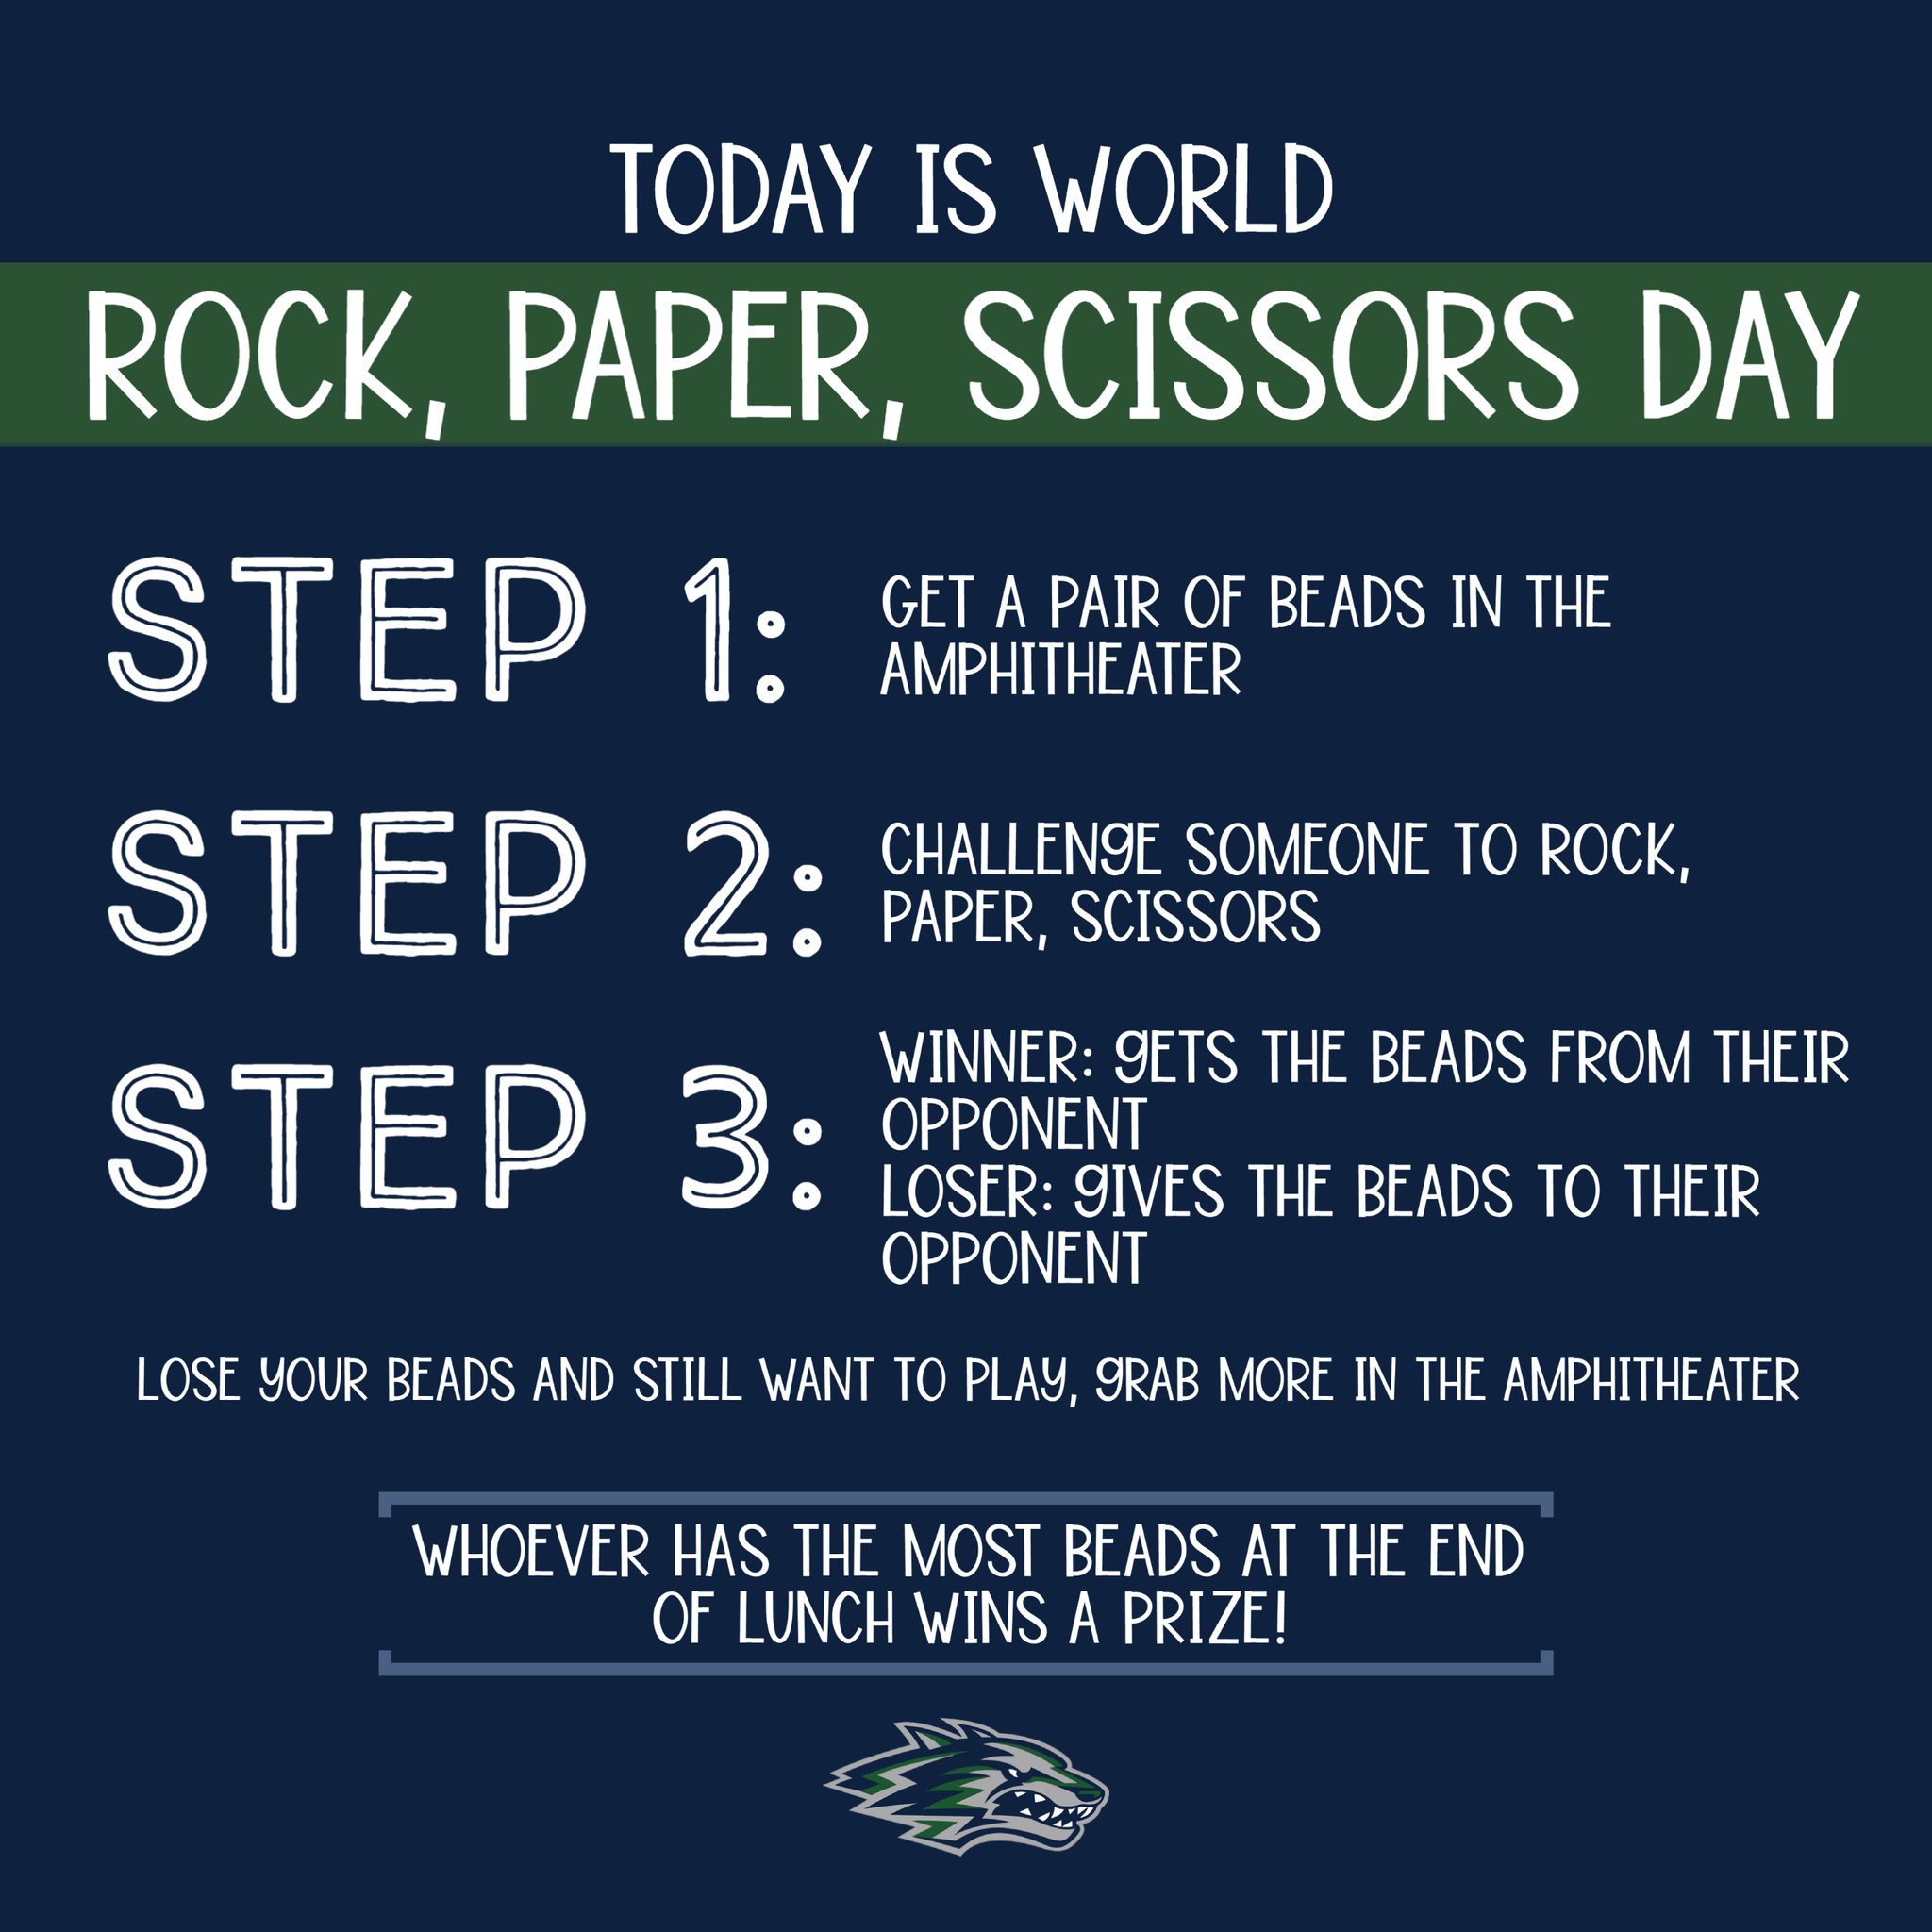 WORLD ROCK PAPER SCISSORS DAY - August 27 - National Day Calendar